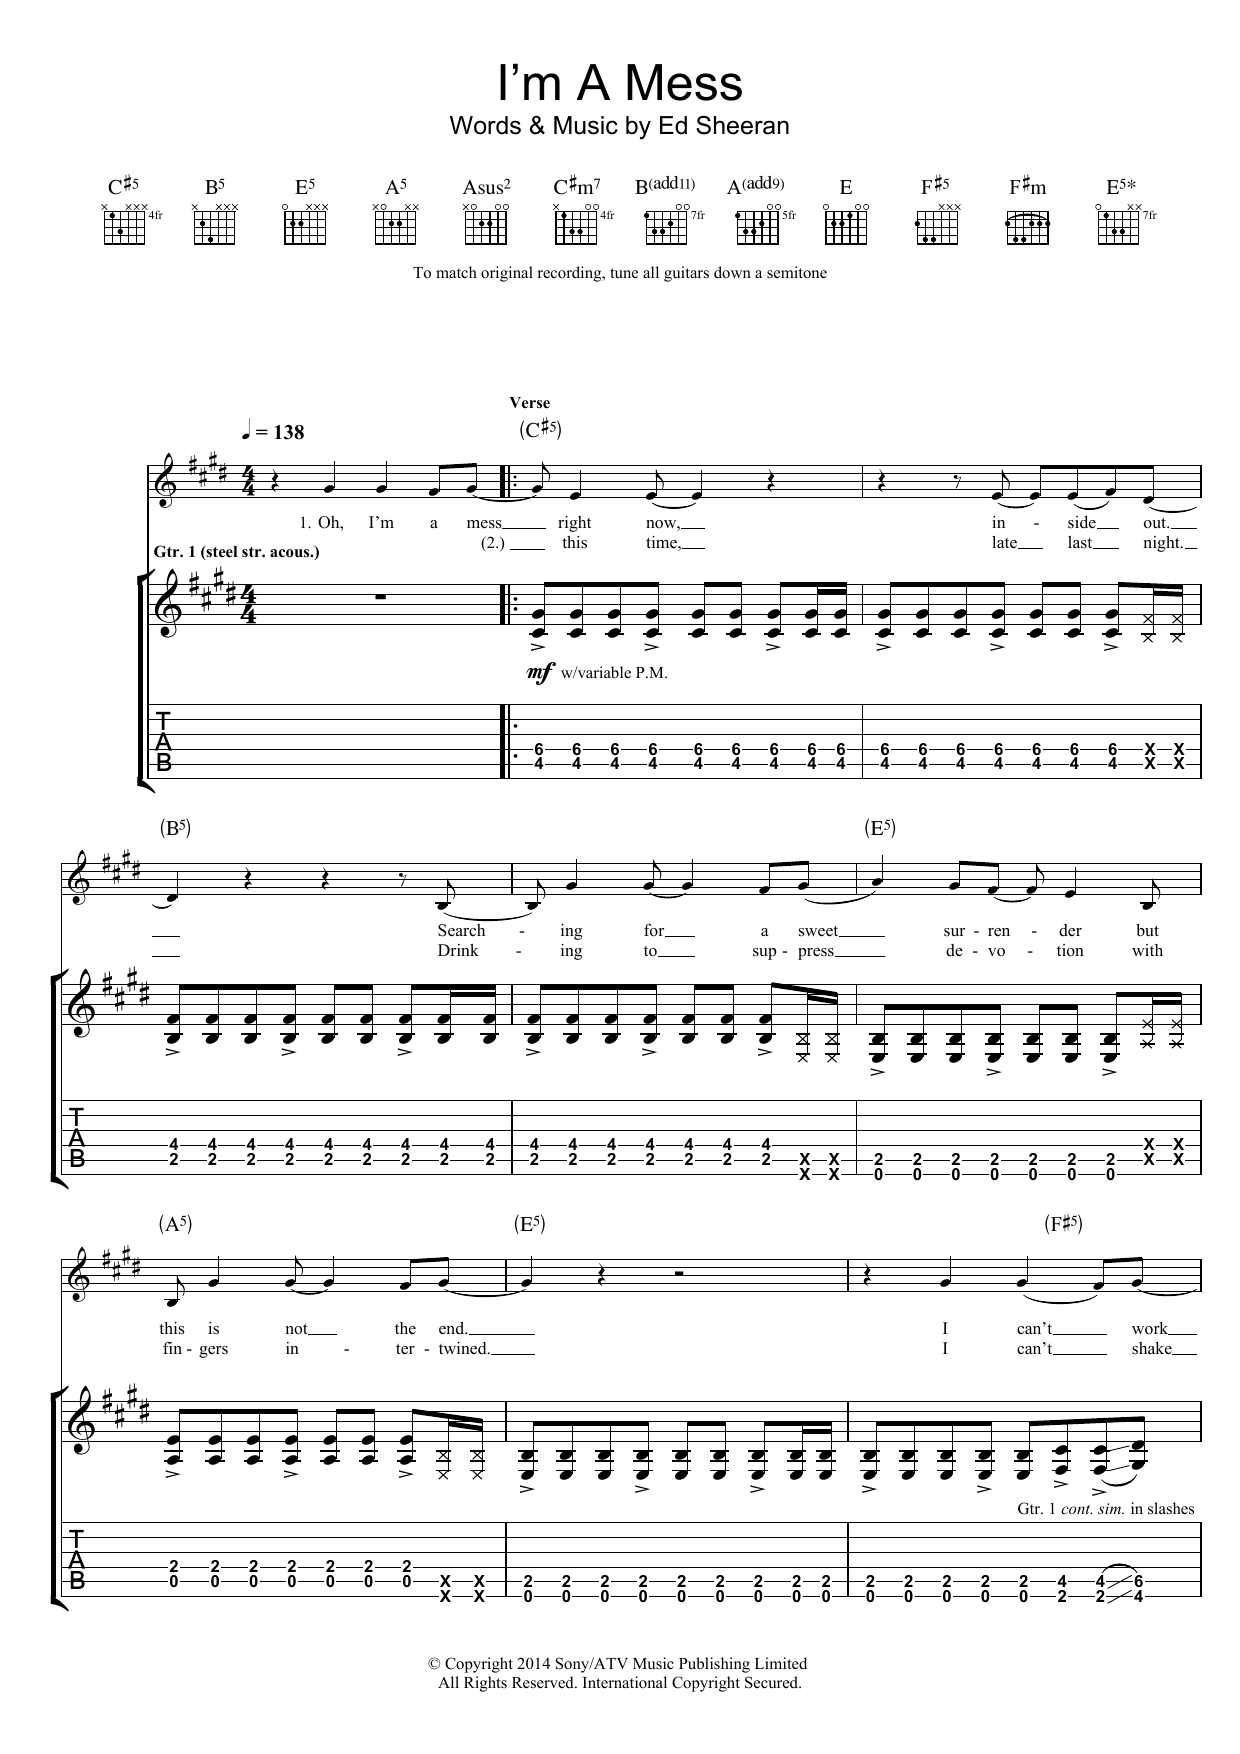 Ed Sheeran I'm A Mess Sheet Music Notes & Chords for Beginner Piano - Download or Print PDF